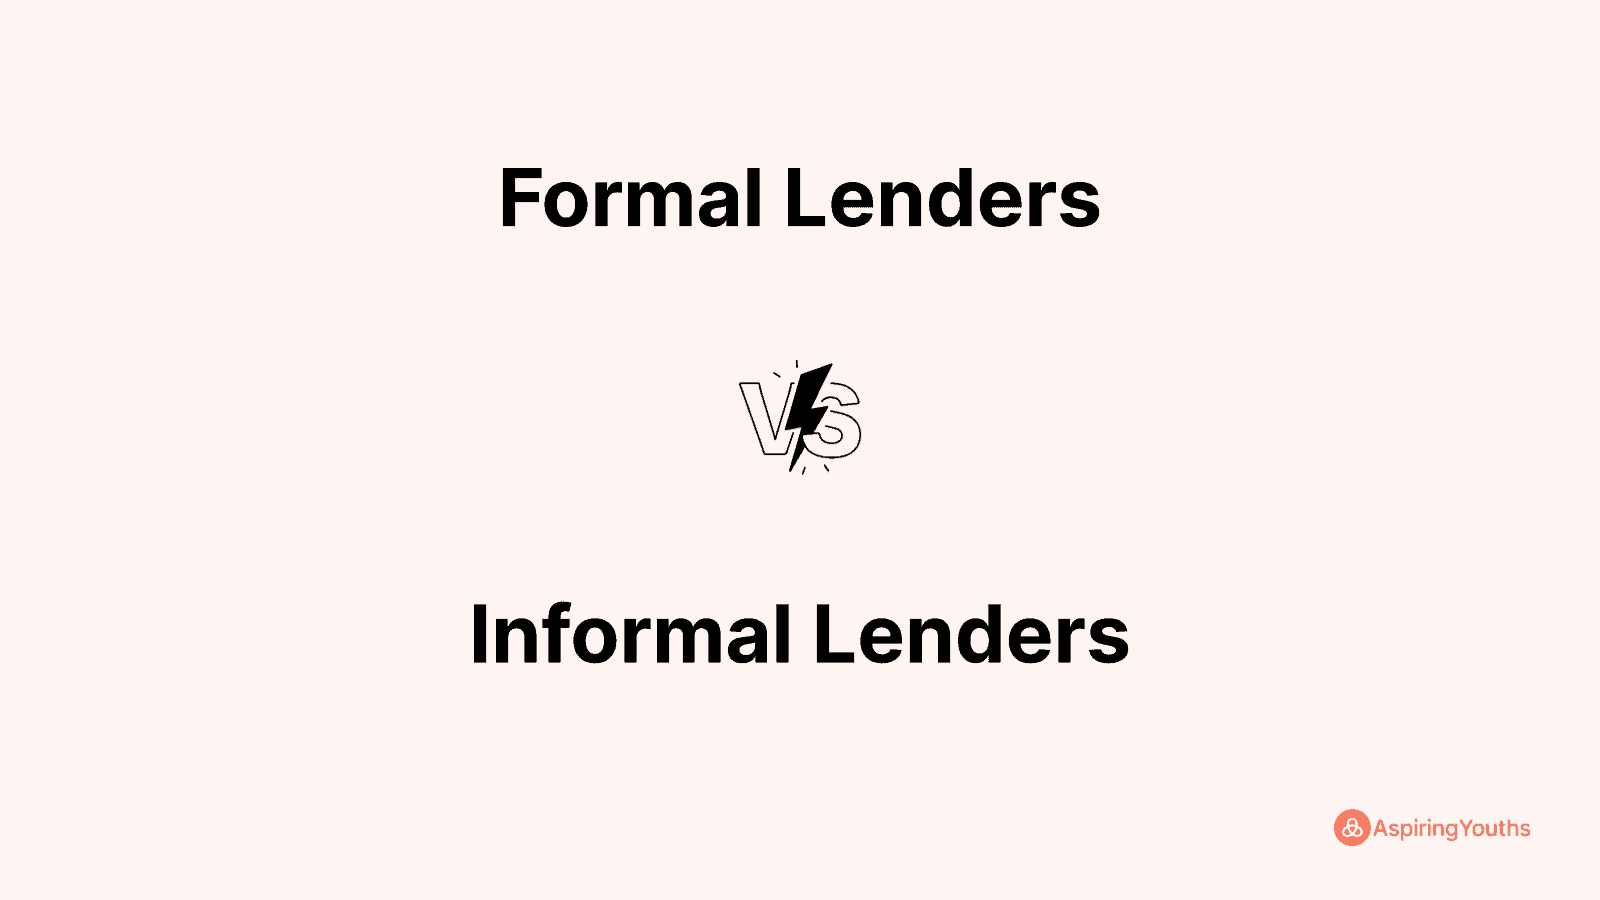 Formal Lenders vs Informal Lenders